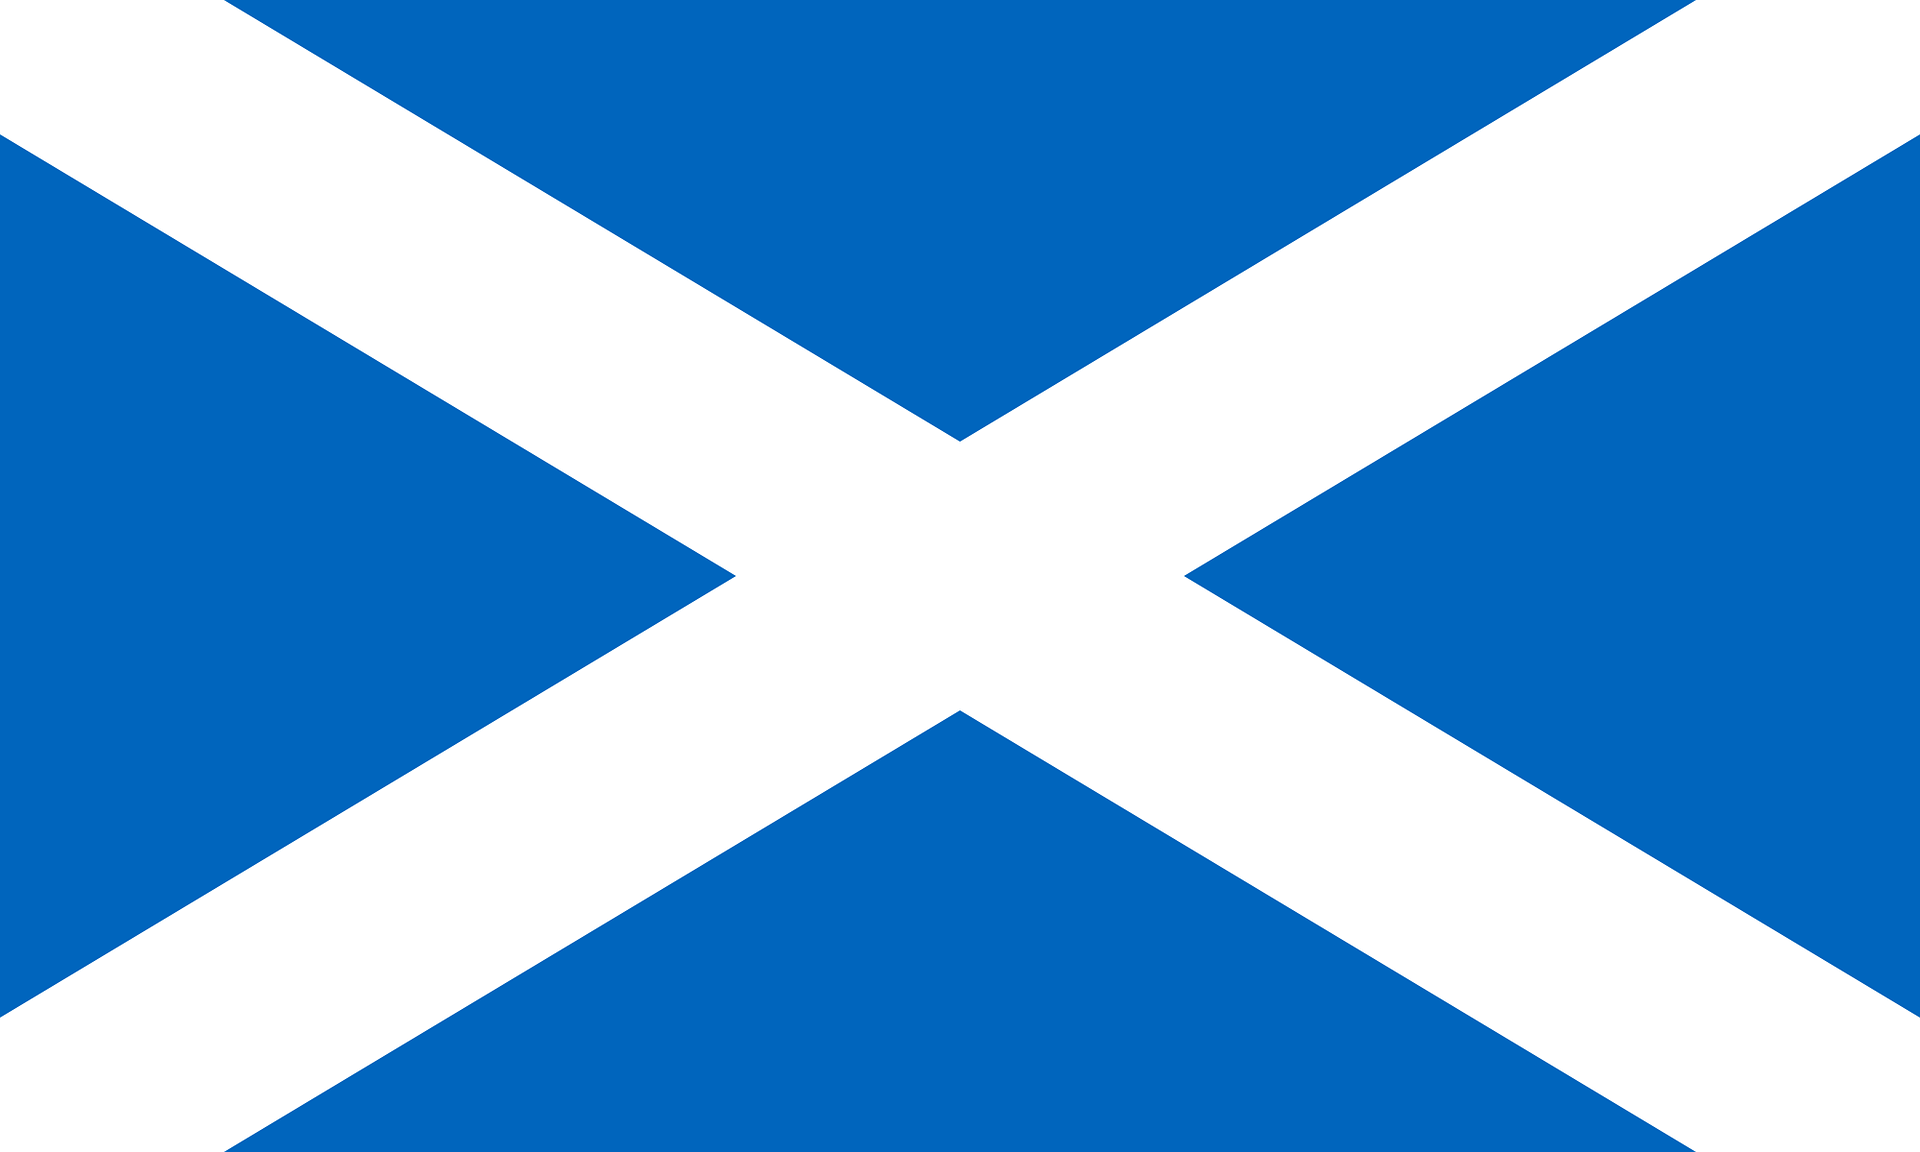 scotland-891914_1920